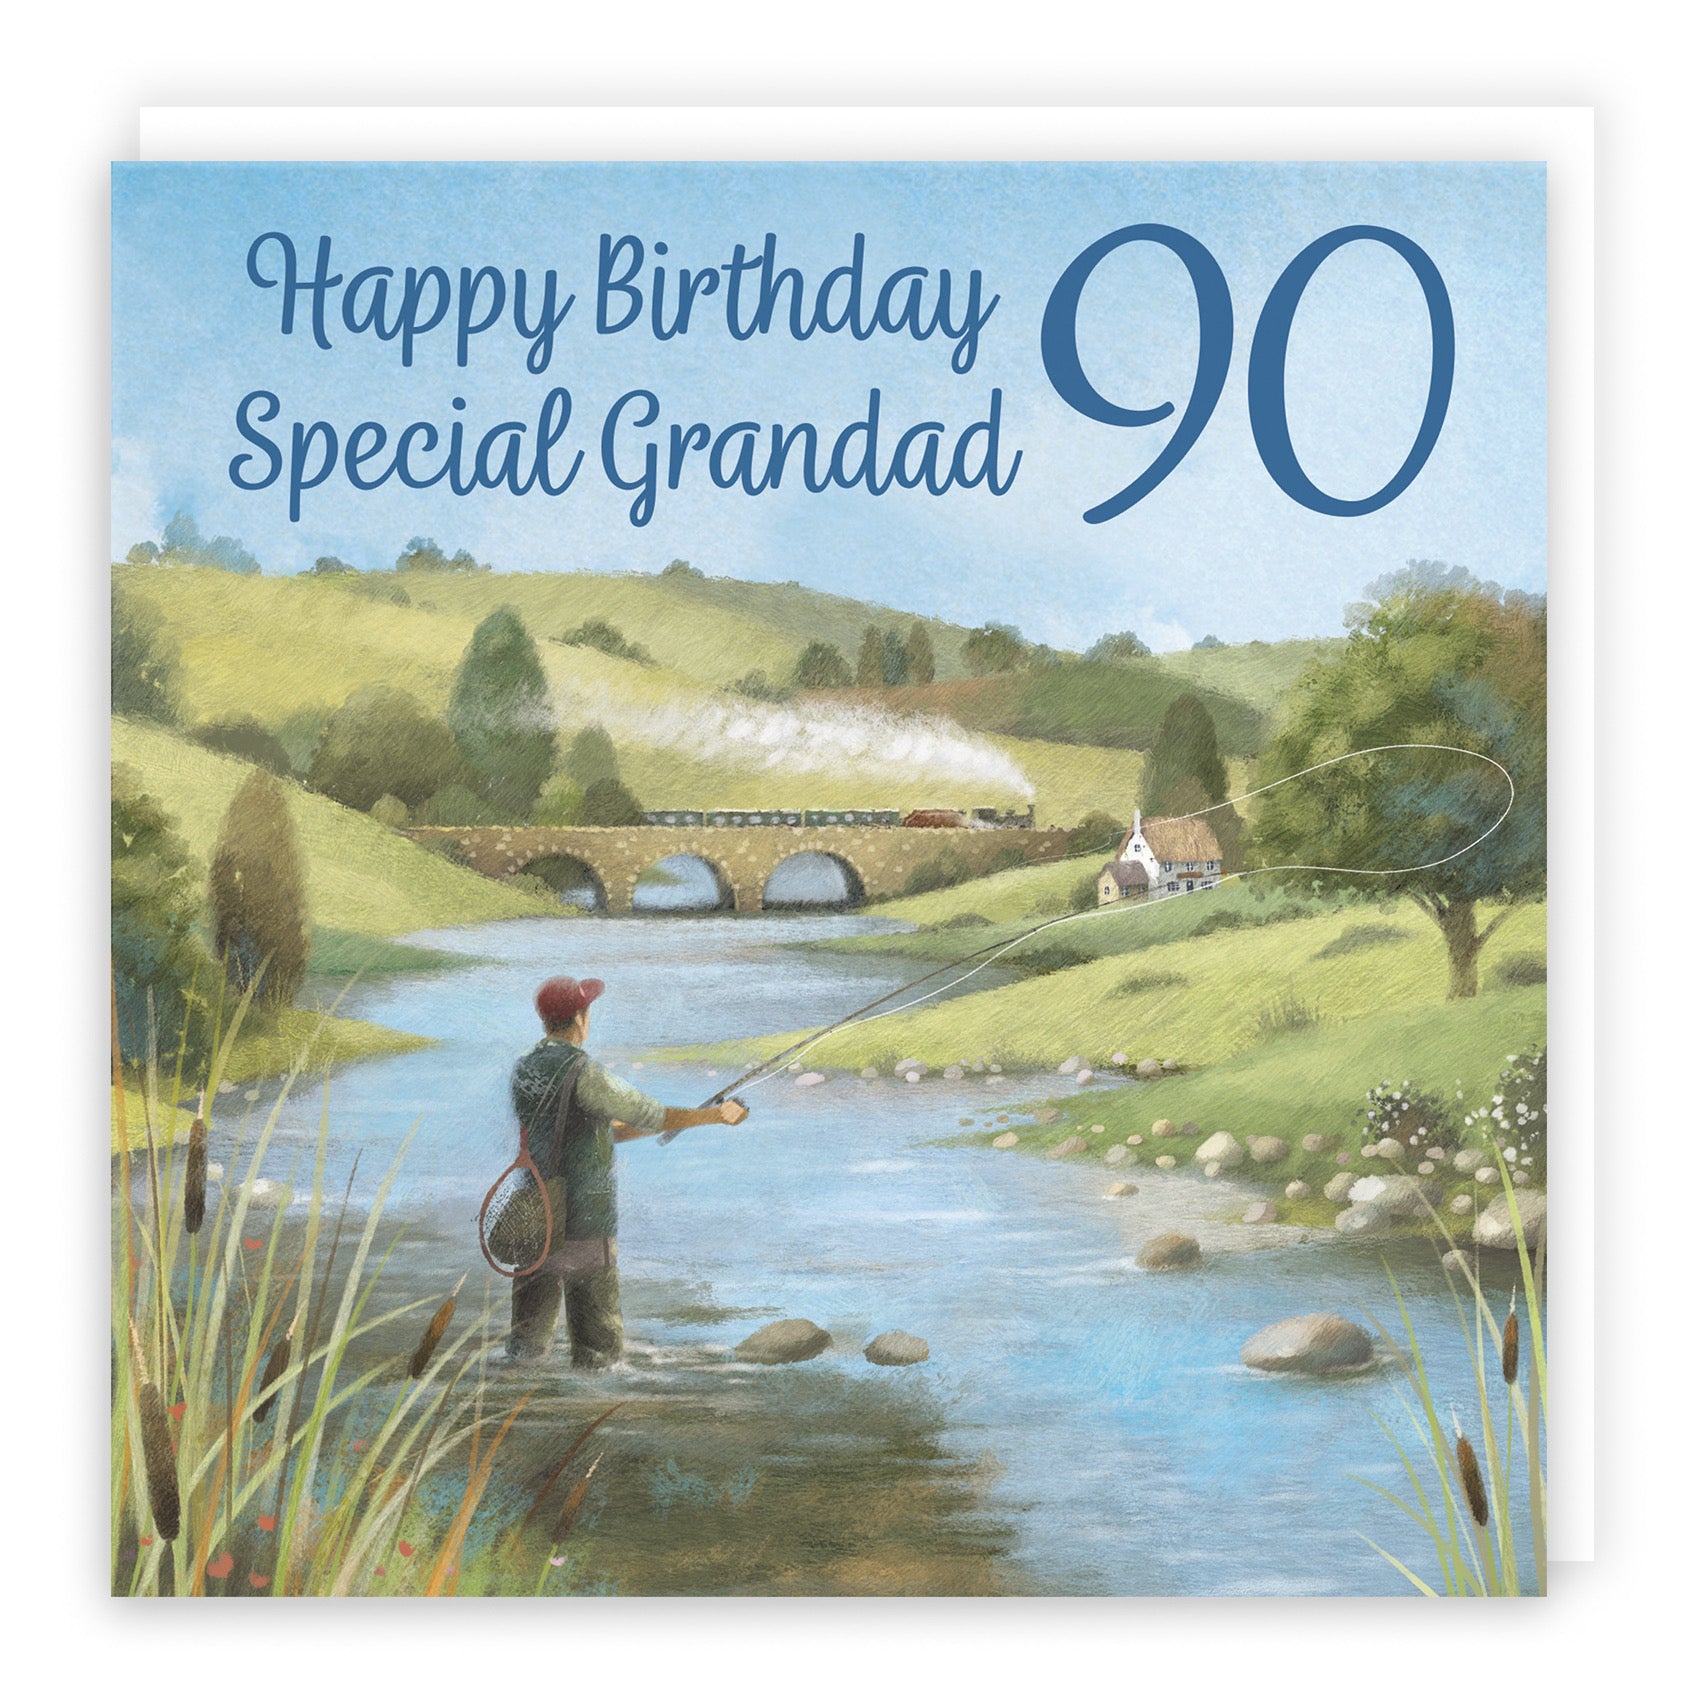 90th Grandad Fly Fishing Birthday Card Milo's Gallery - Default Title (B0CQWSPWG6)